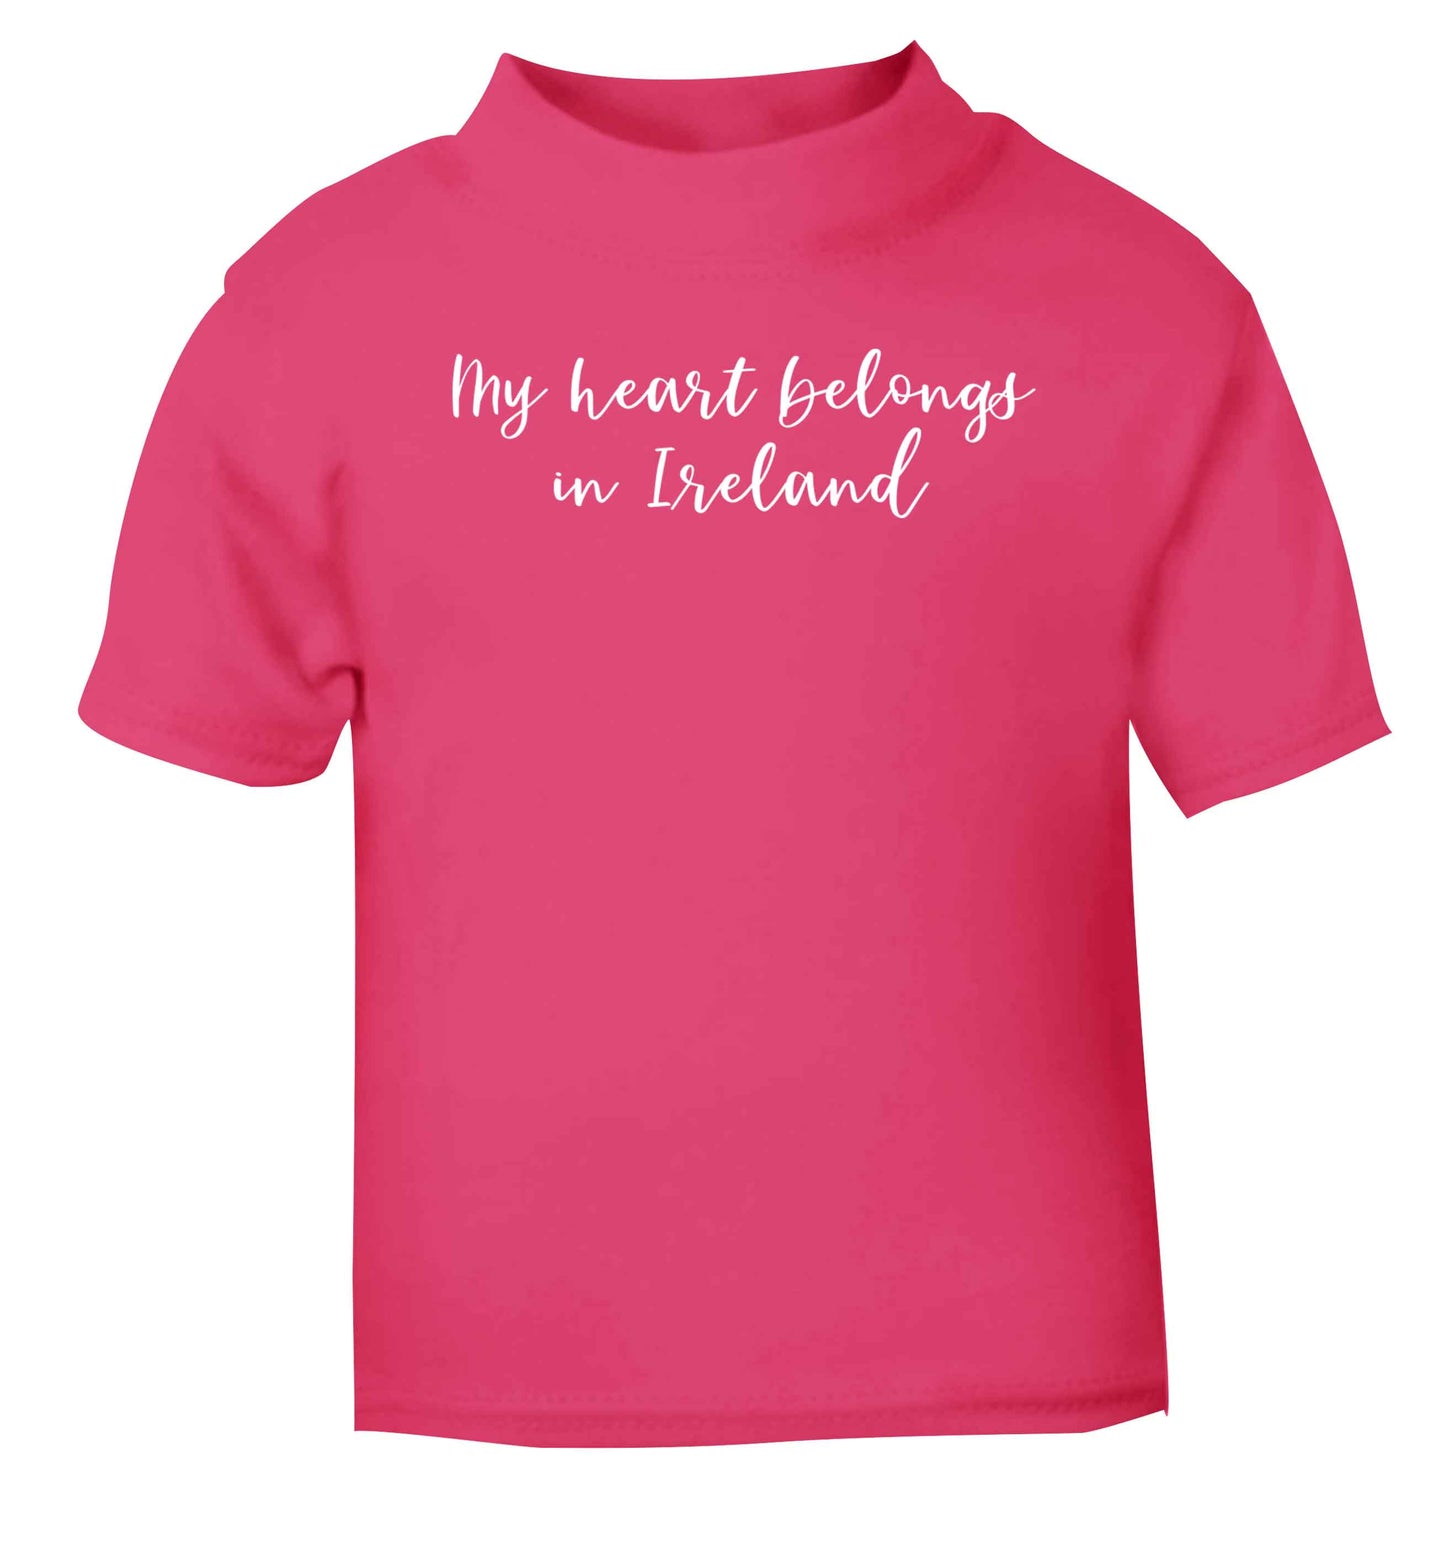 My heart belongs in Ireland pink baby toddler Tshirt 2 Years